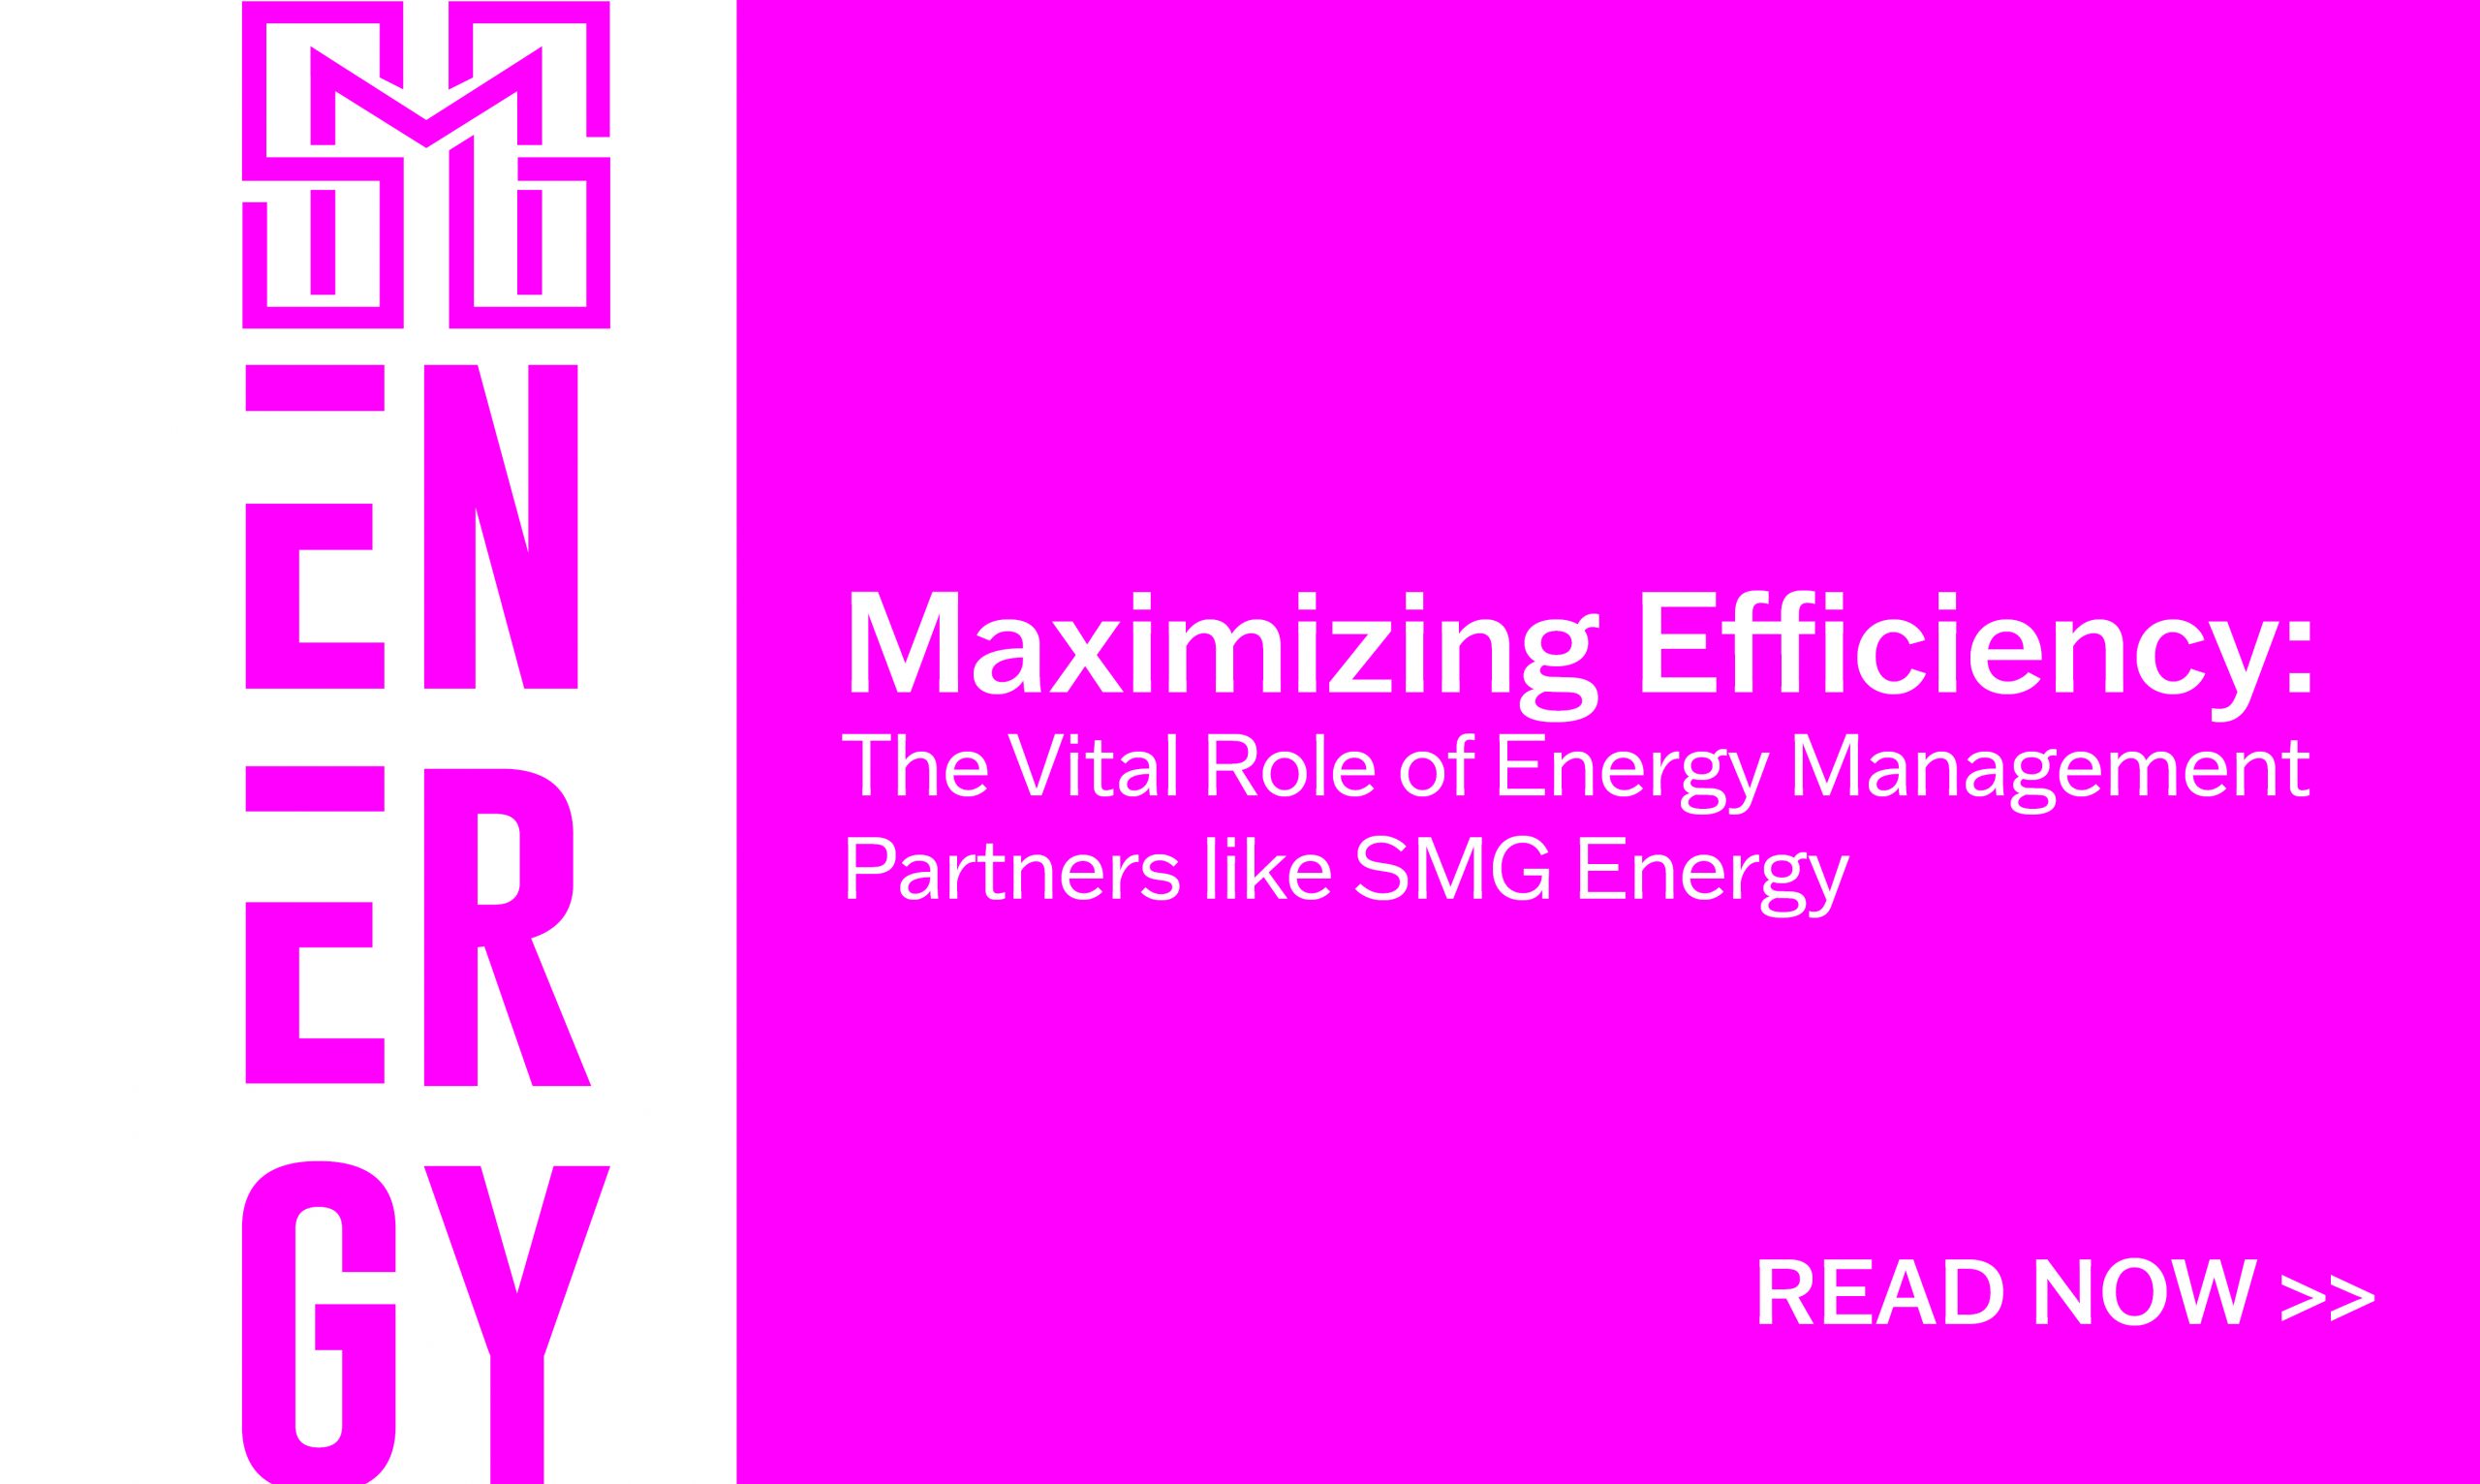 Maximizing Efficiency: The Vital Role of Energy Management Partners like SMG Energy